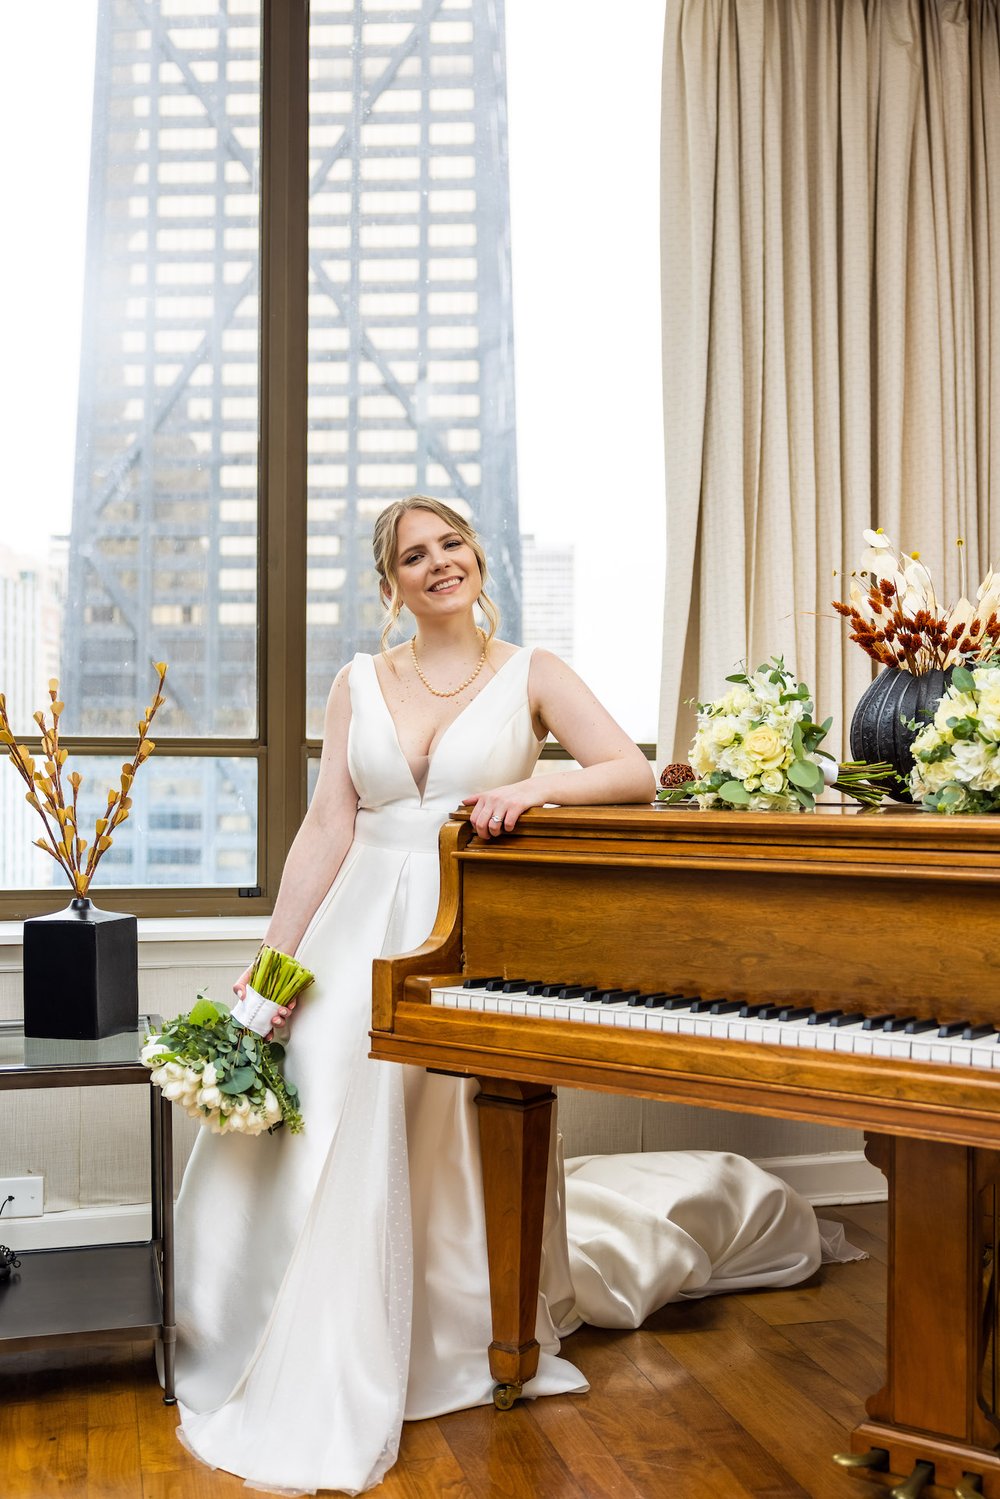  Alex Maldonado Photography | Chicago Wedding and lifestyle Photographer |  selina hotel bridal portrait with skyline view out window hancock building 